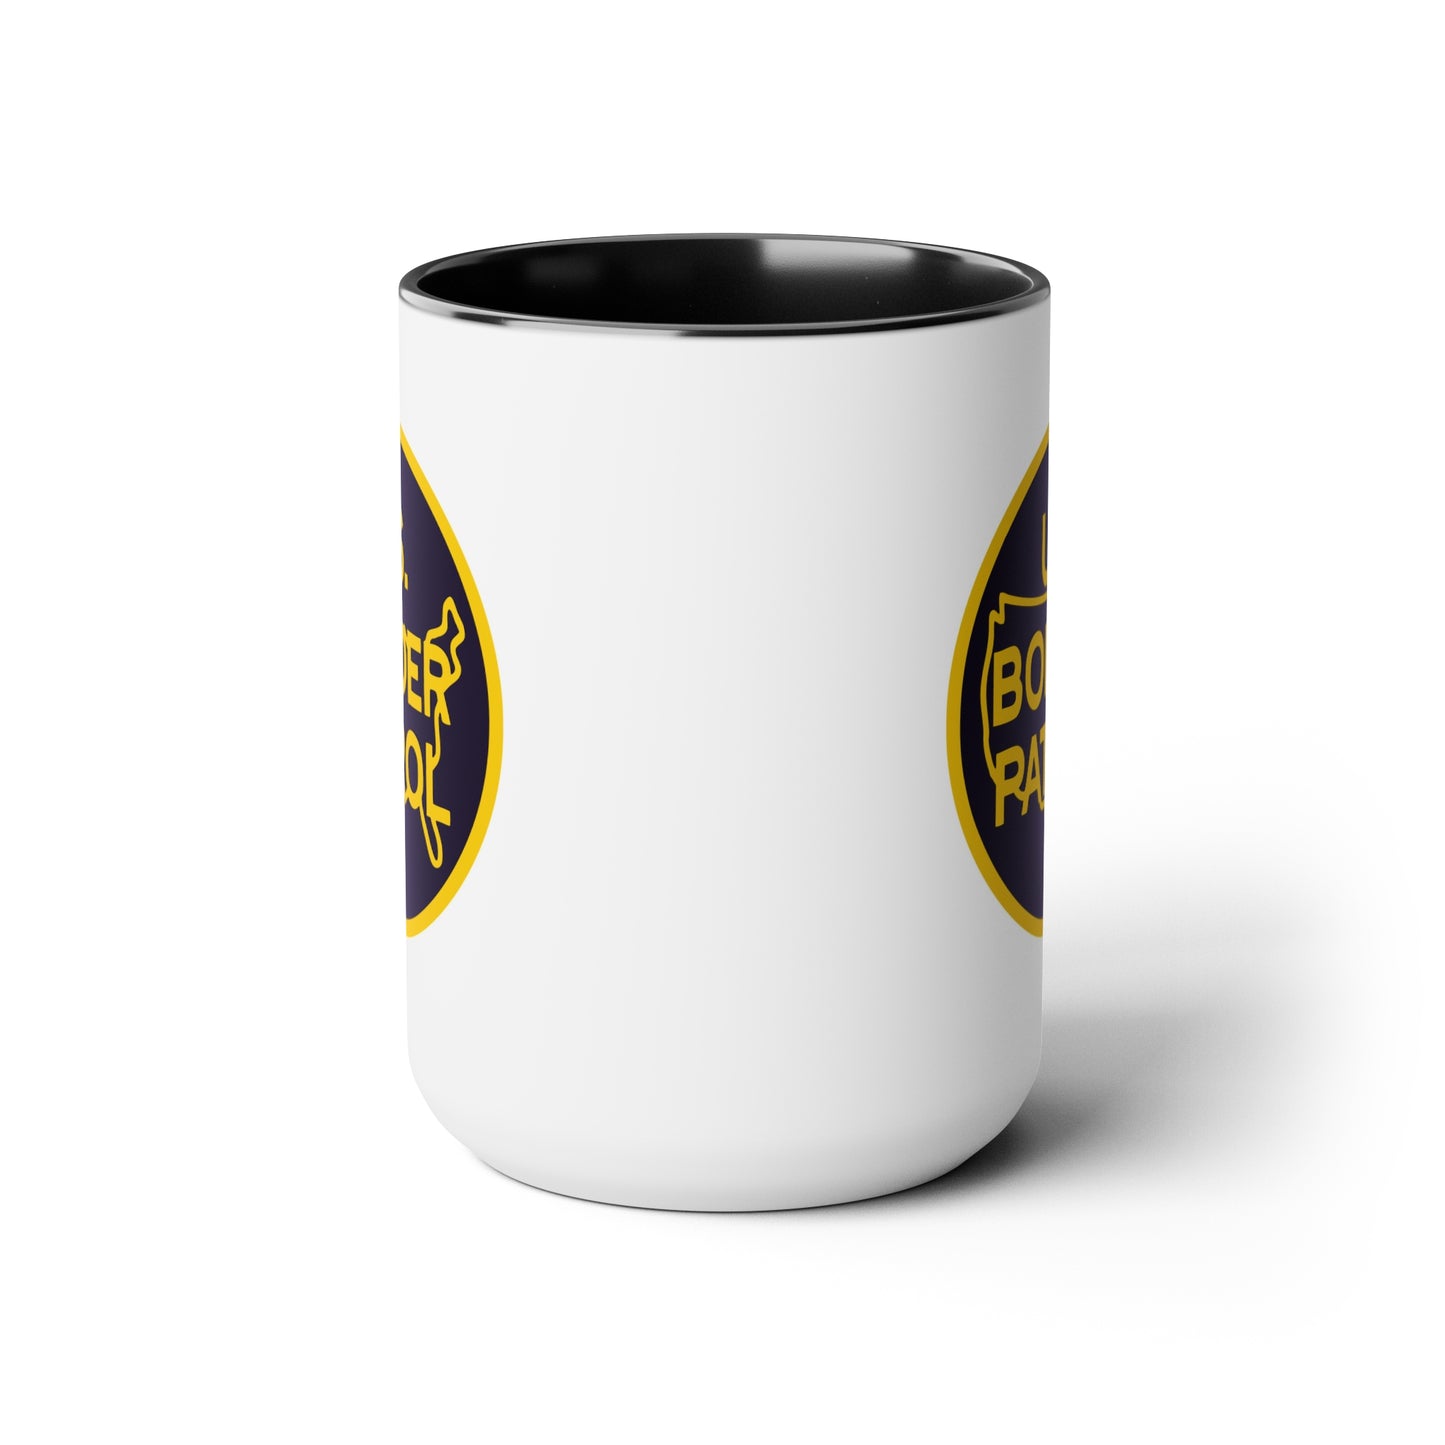 US Border Patrol Coffee Mugs - Double Sided Black Accent White Ceramic 15oz by TheGlassyLass